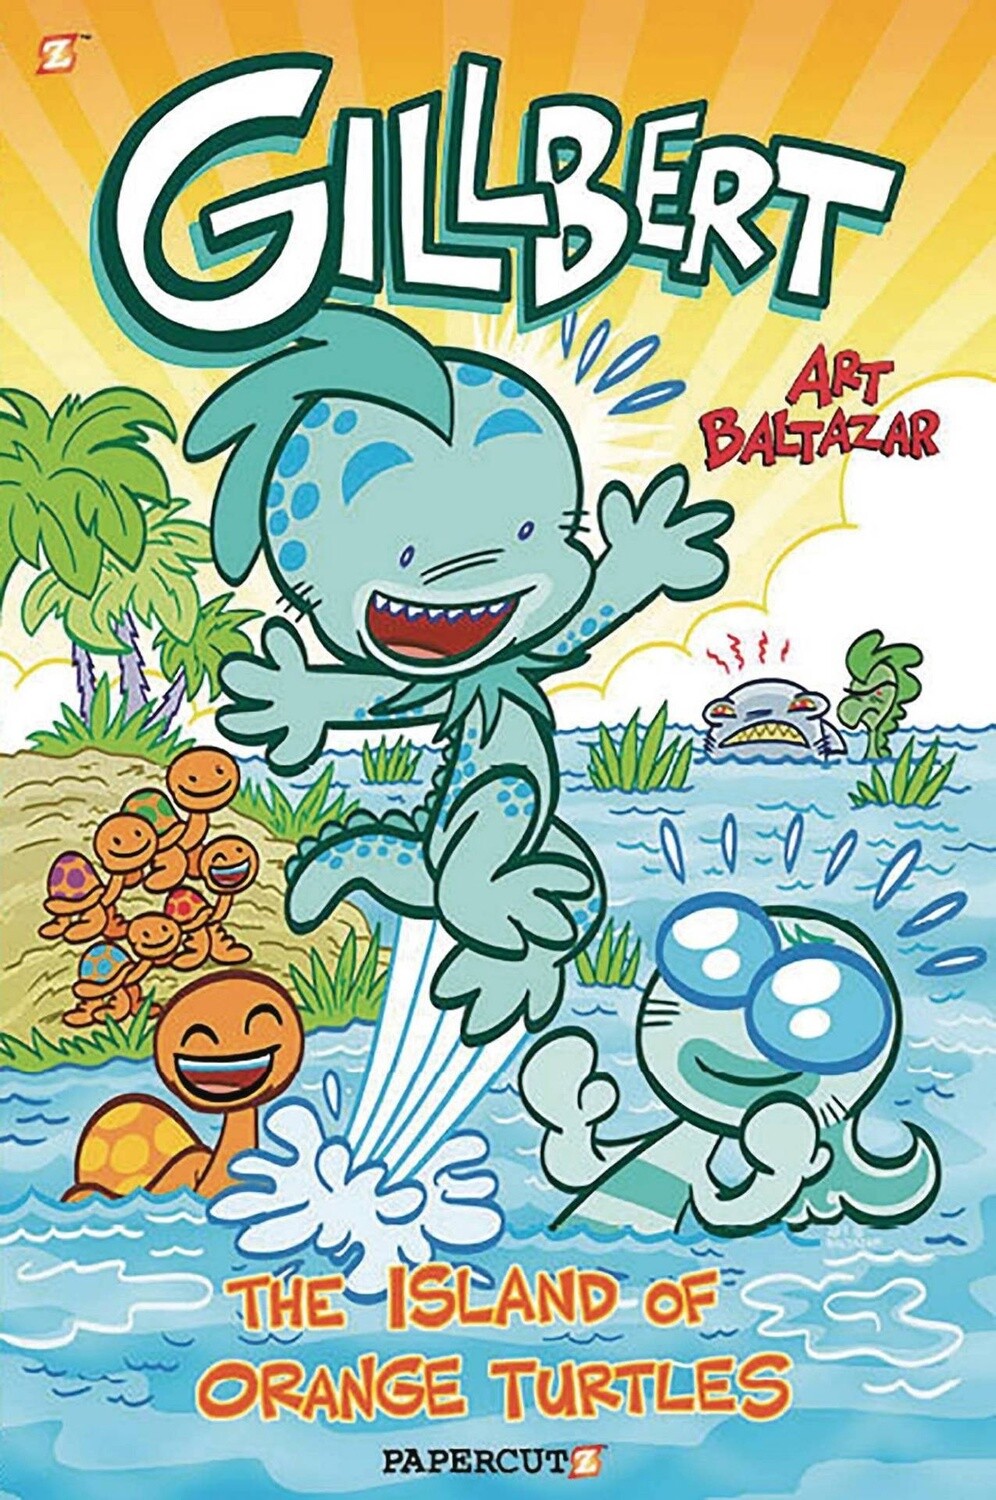 Gillbert: The Little Merman Vol. 4: Island of Orange Turtles